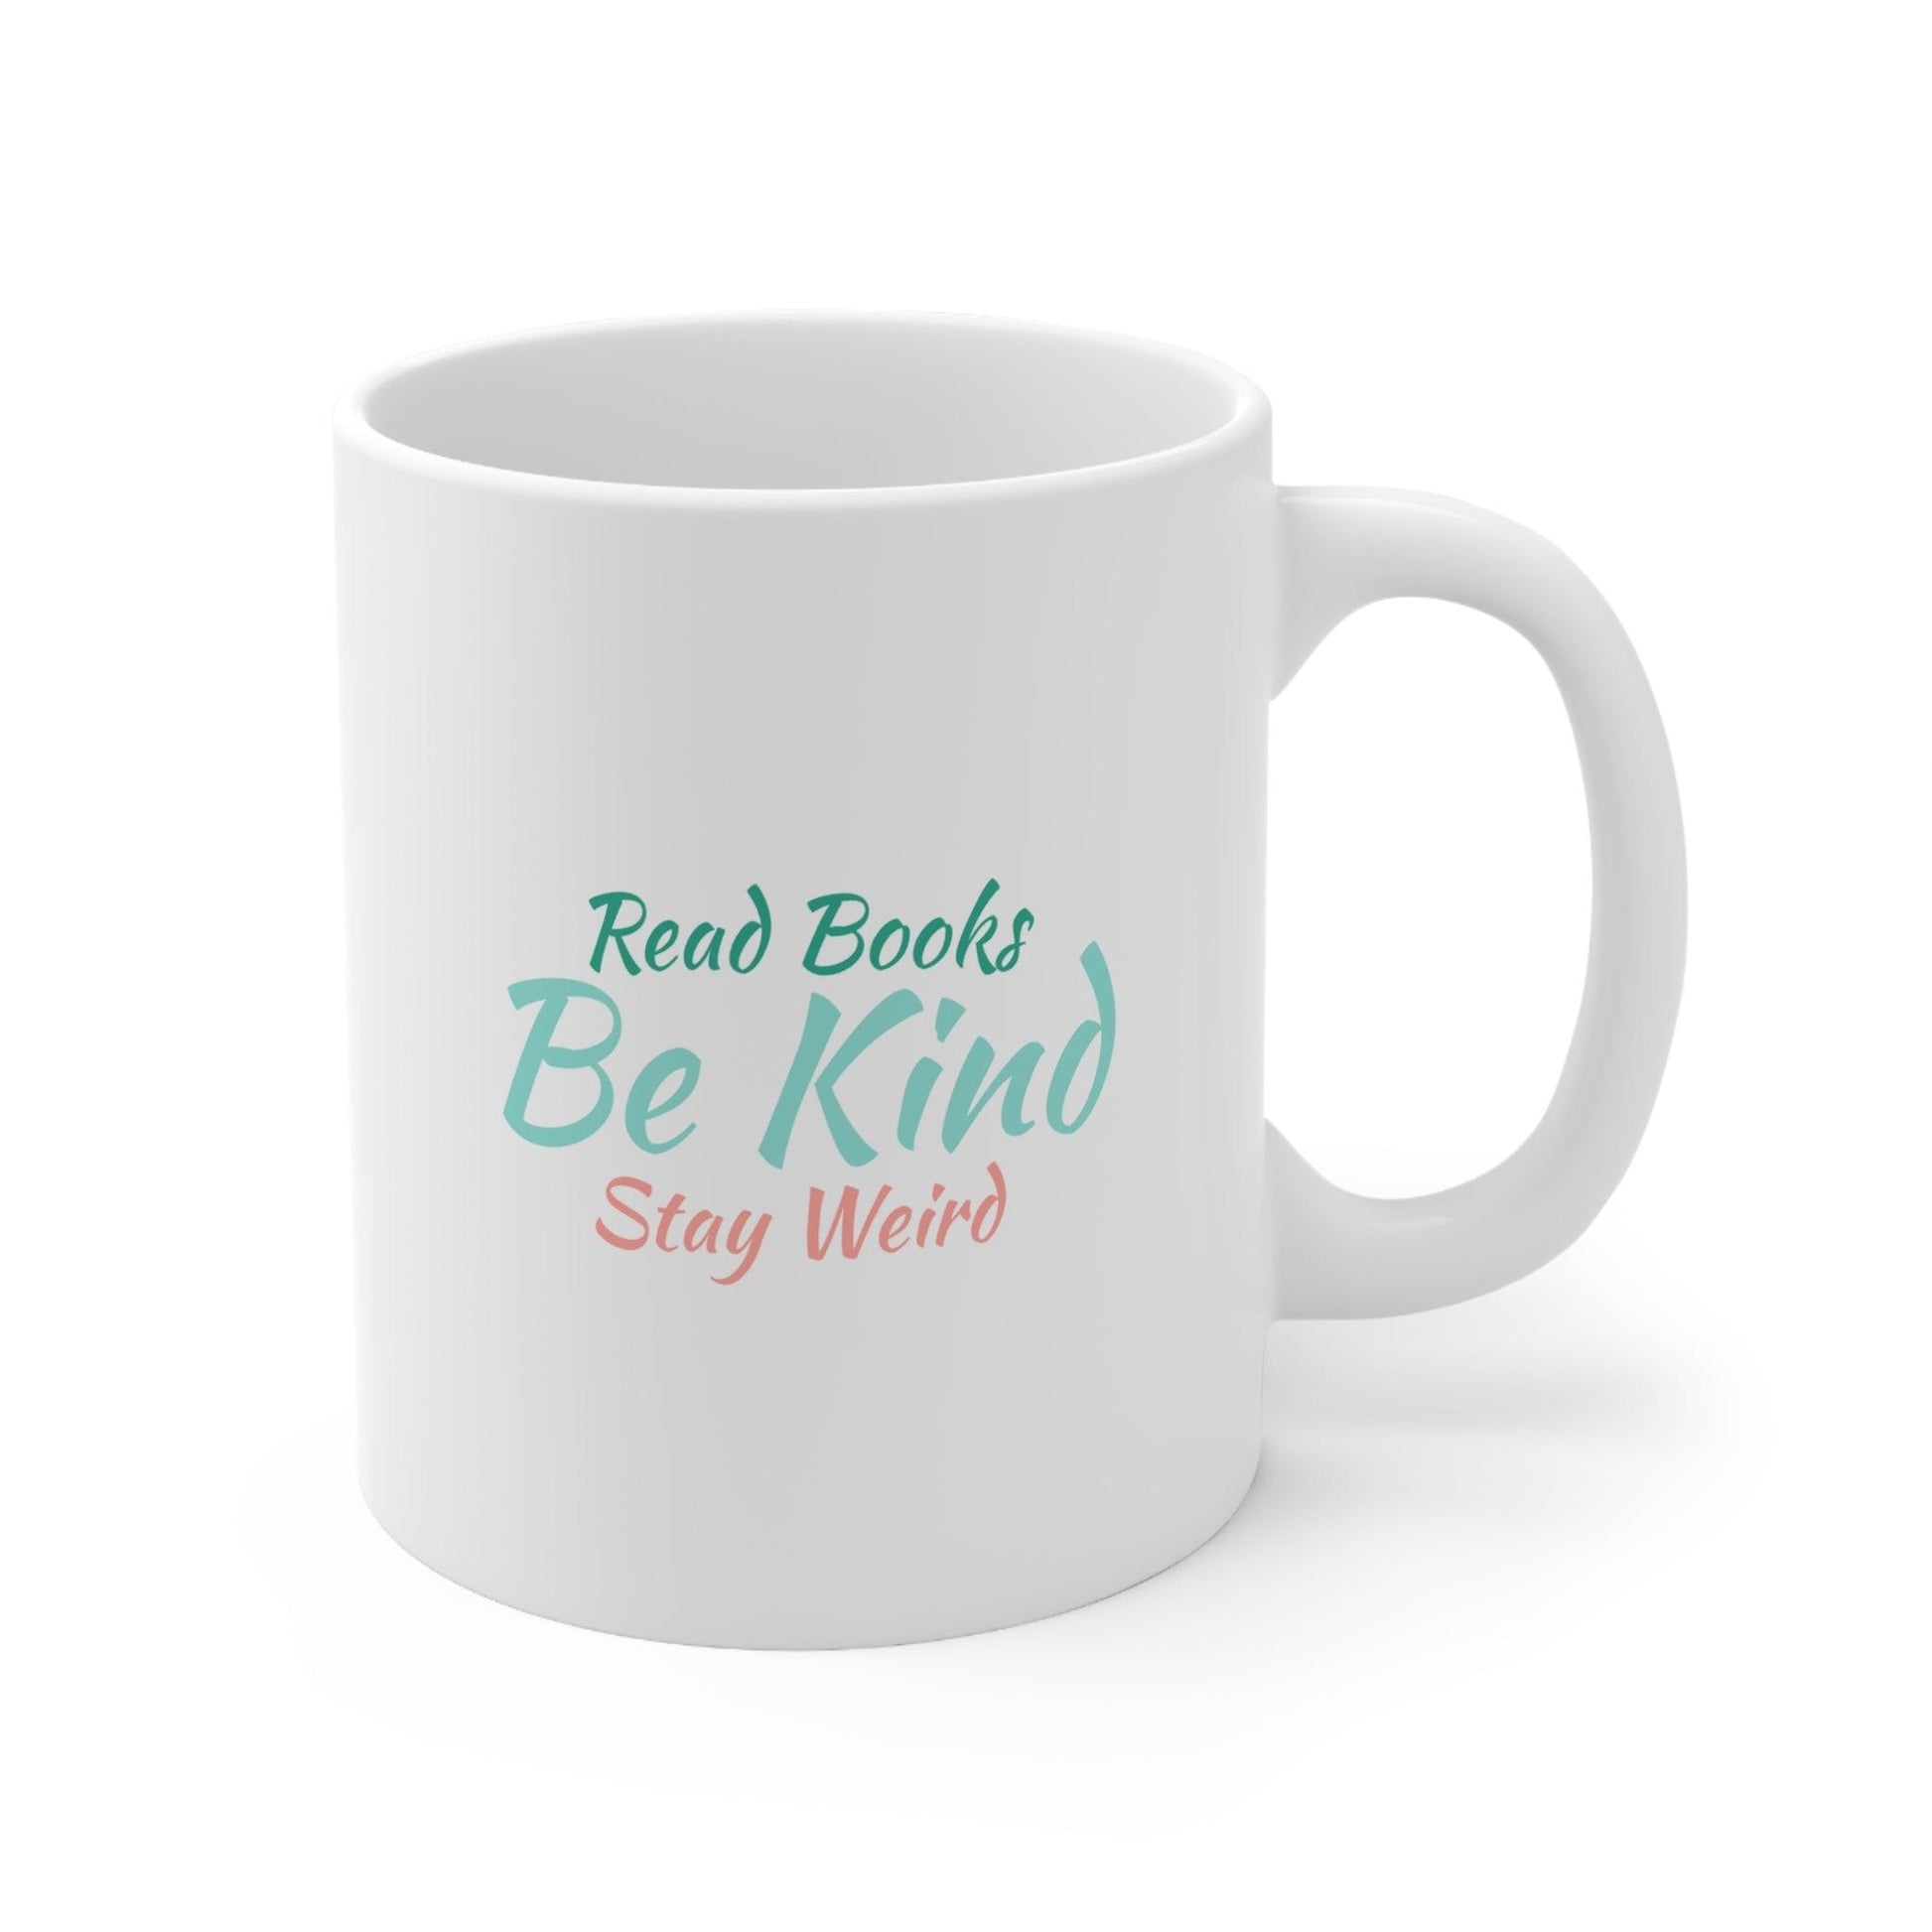 "Read Books, Stay Kind, Stay Weird" Ceramic Mug 11oz - Pandaize